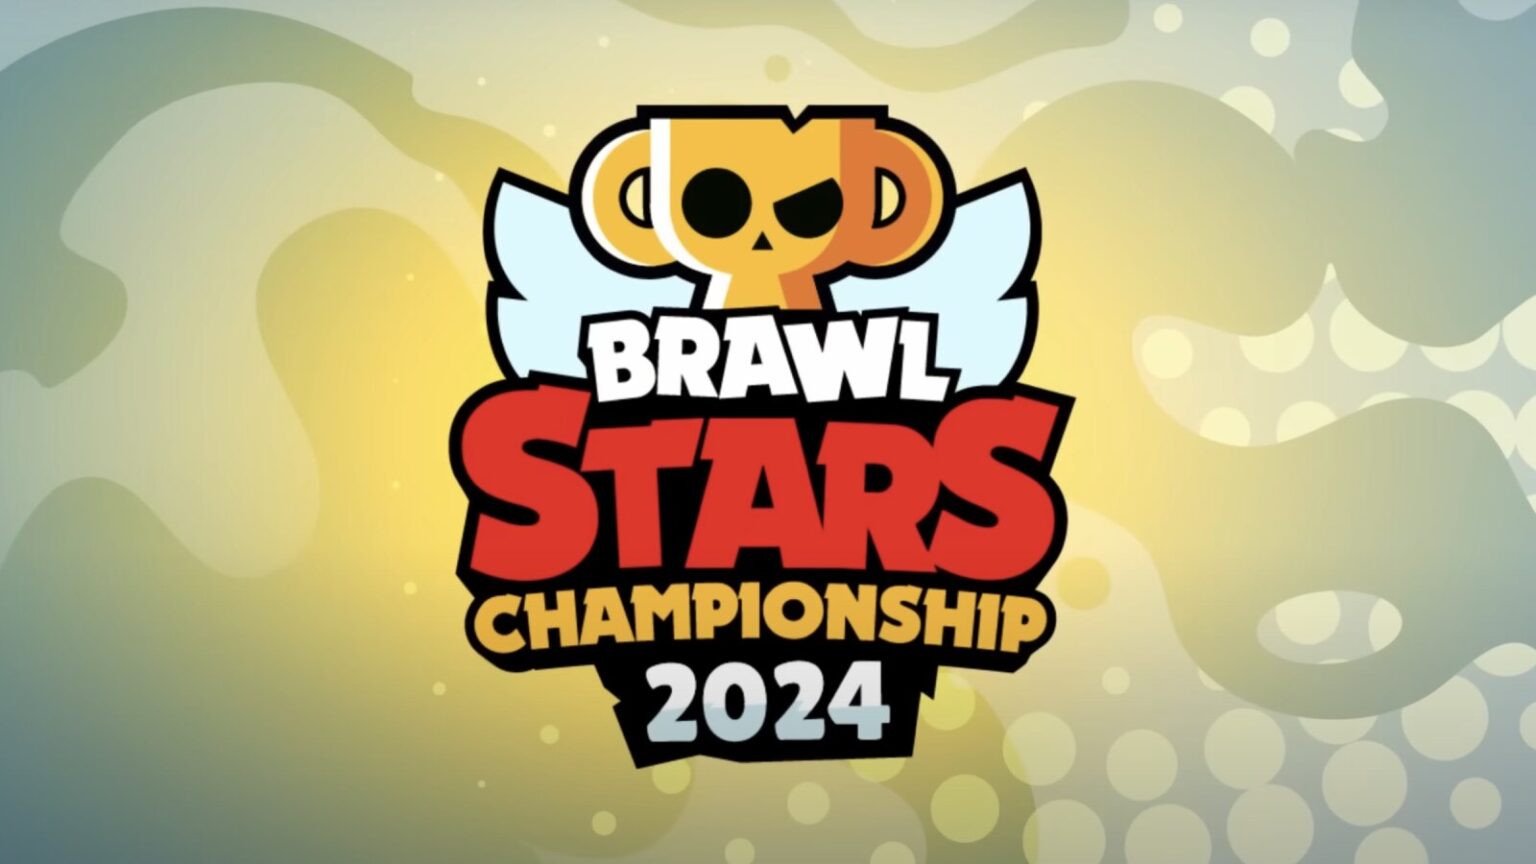 Brawl Stars Championship 2024 logo displayed